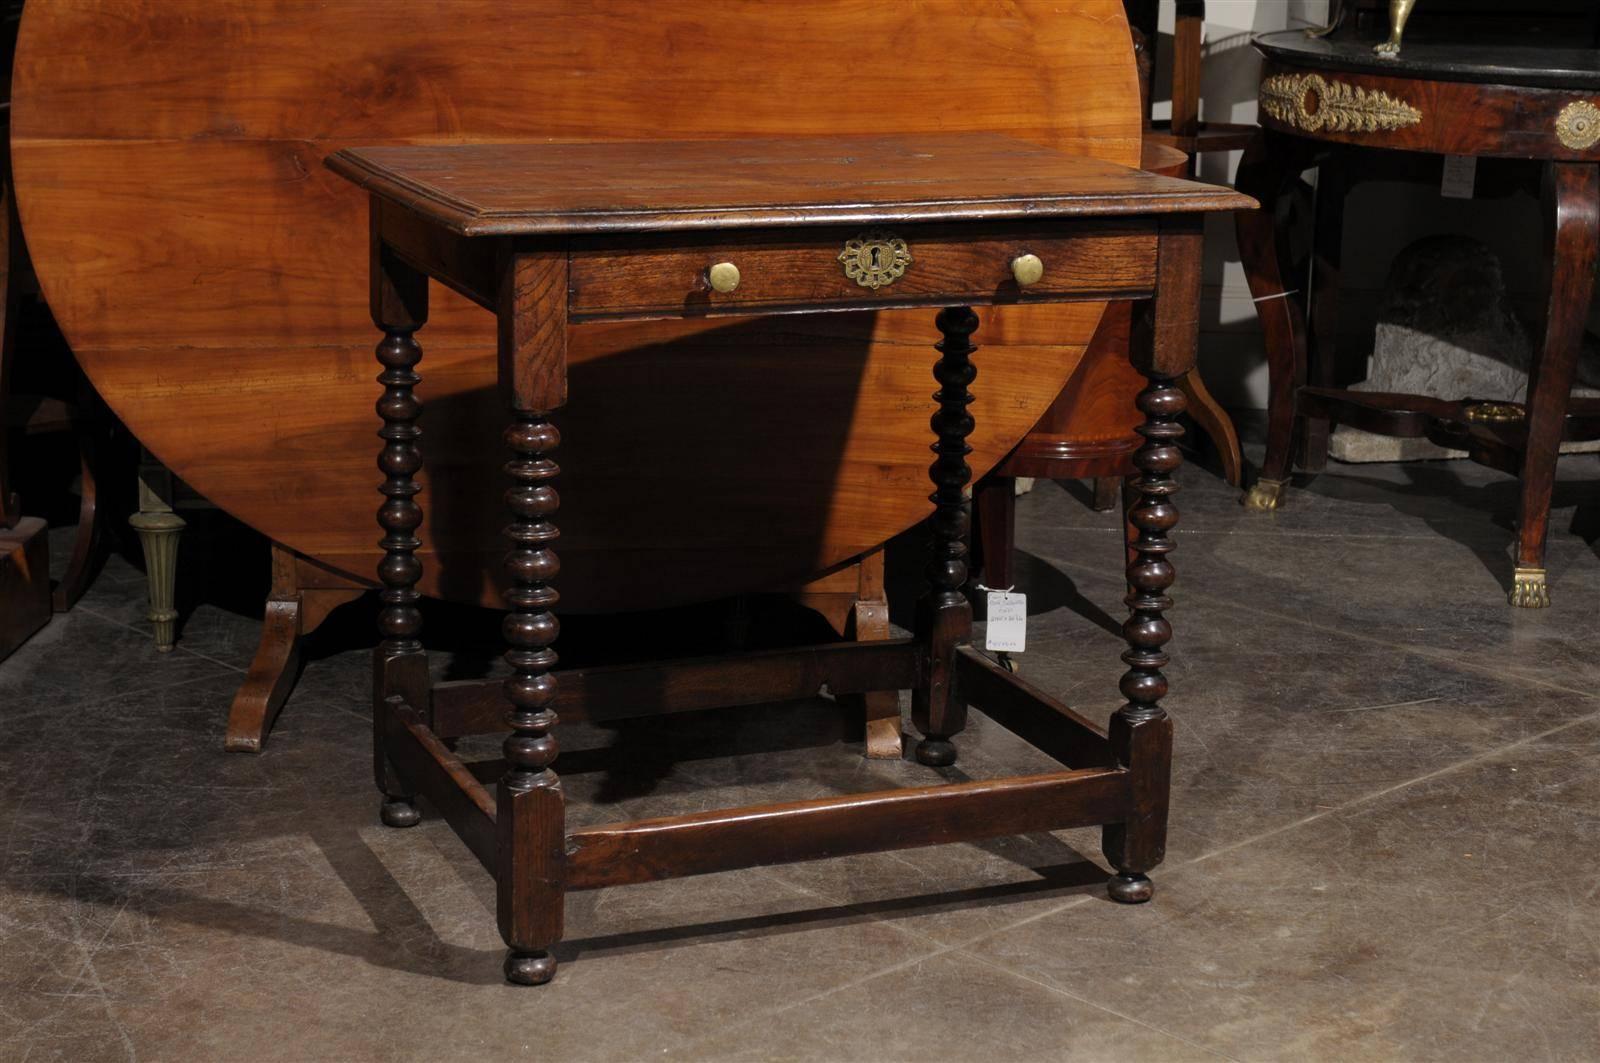 English oak bobbin leg table with single drawer.